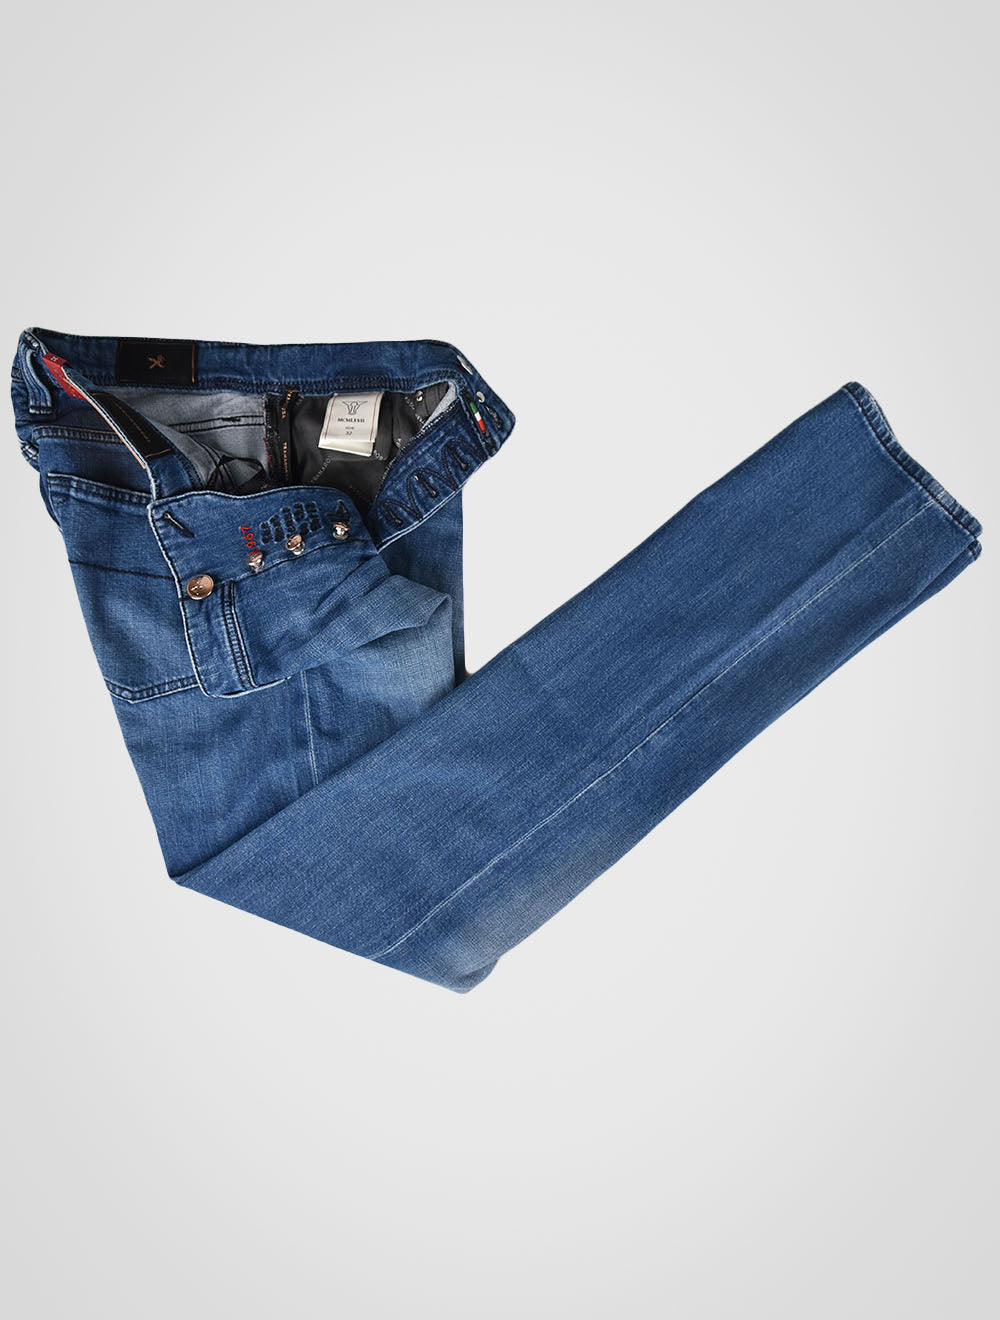 Tramarossa Blue Cotton Pl Jeans